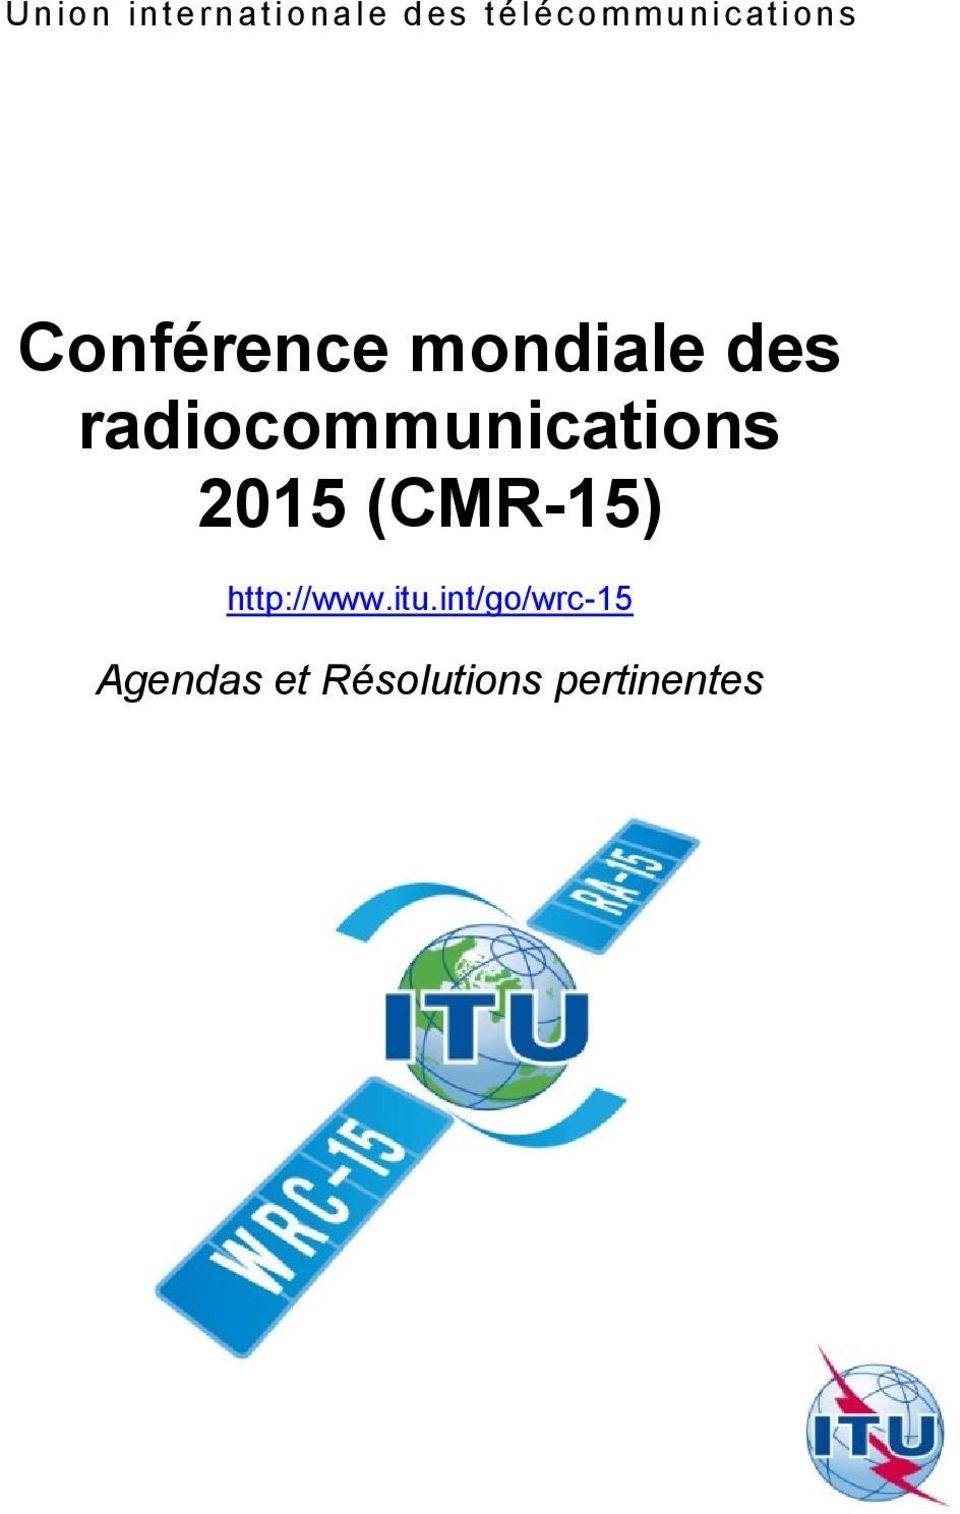 radiocommunications 2015 (CMR-15)